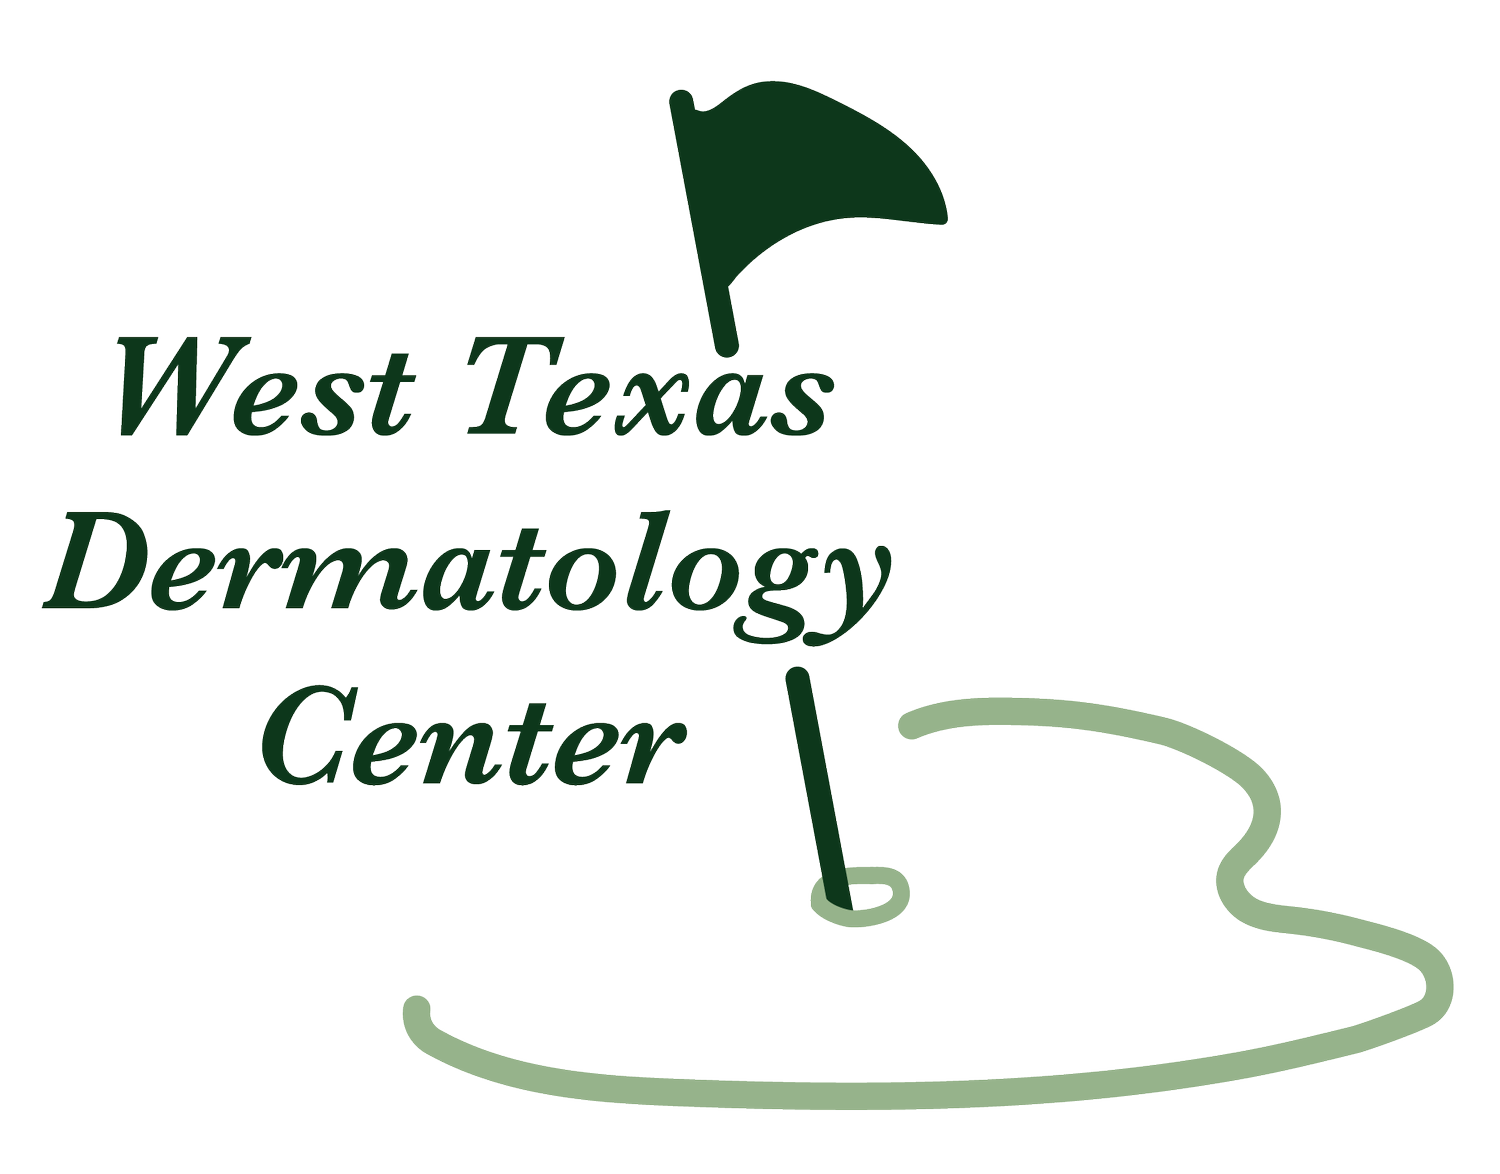 West Texas Dermatology Center